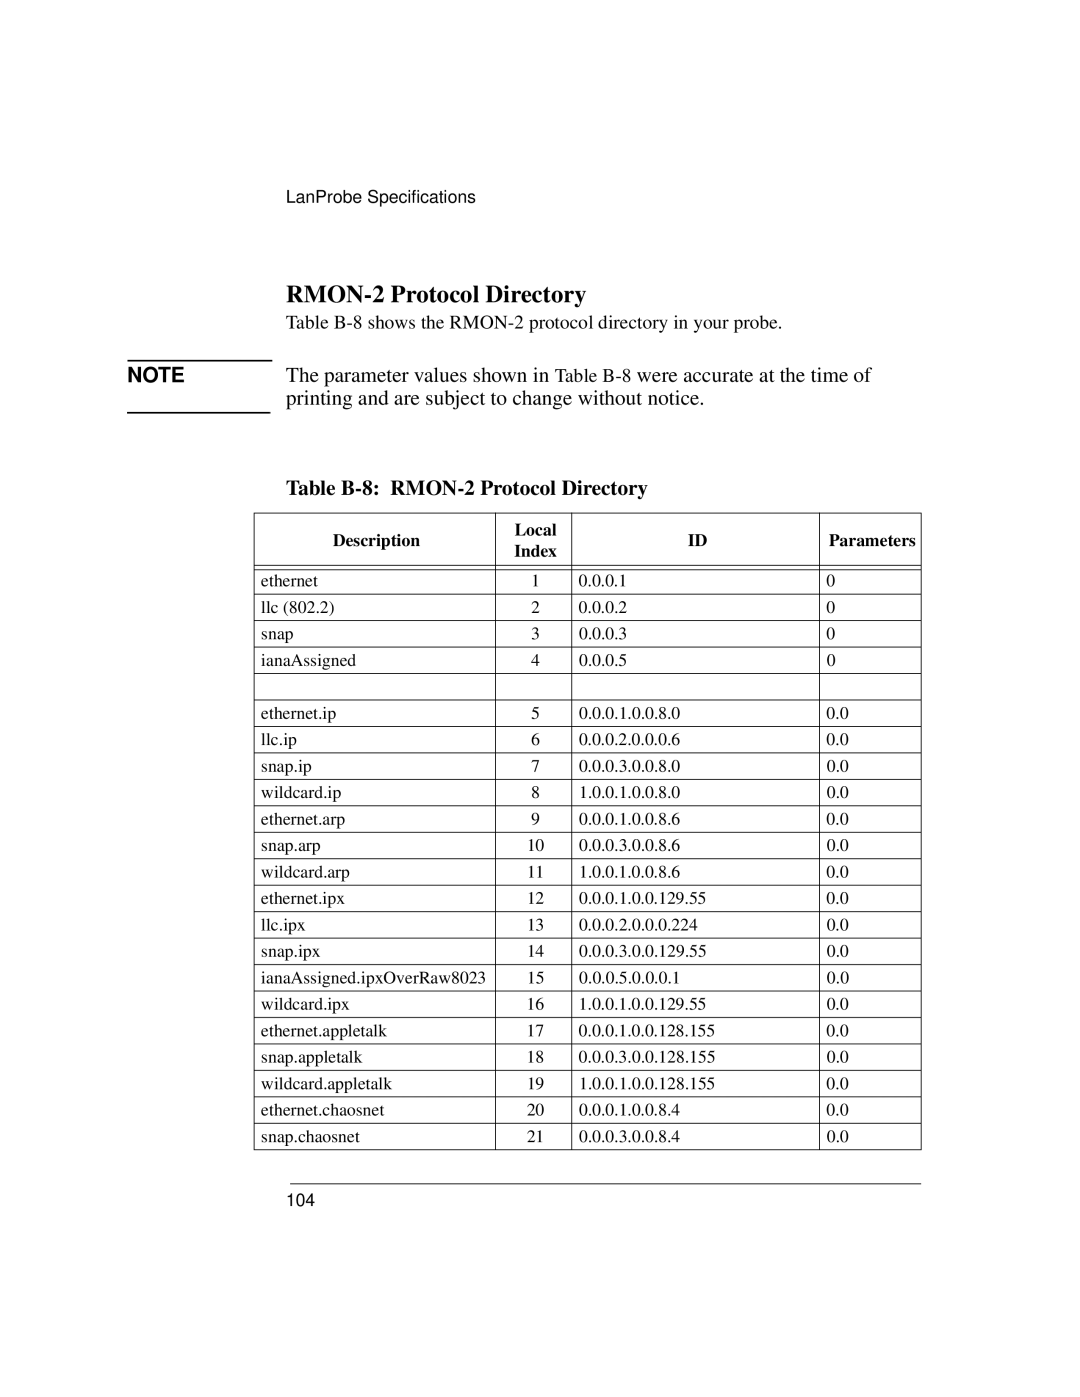 IBM 4986B LanProbe manual Table B-8 RMON-2 Protocol Directory, Description, Local, Parameters, Index 